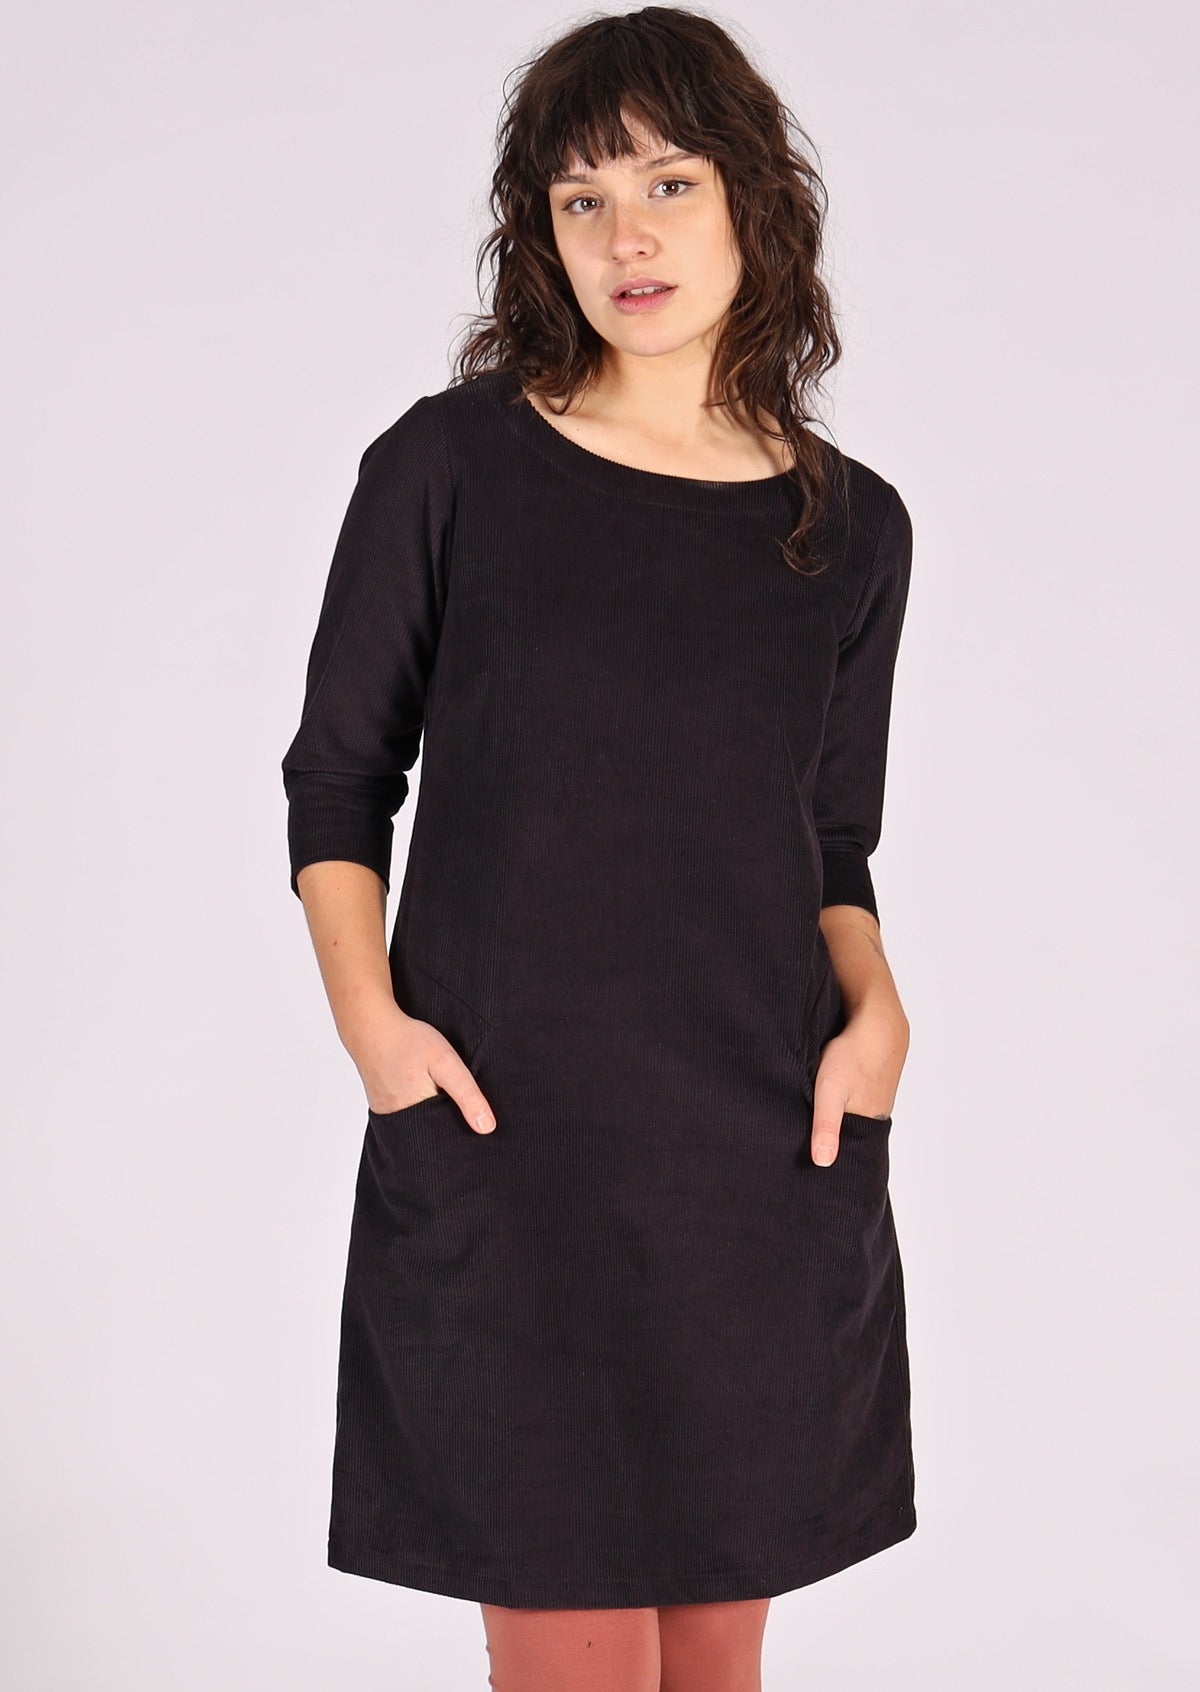 Dark grey cotton corduroy dress with pockets